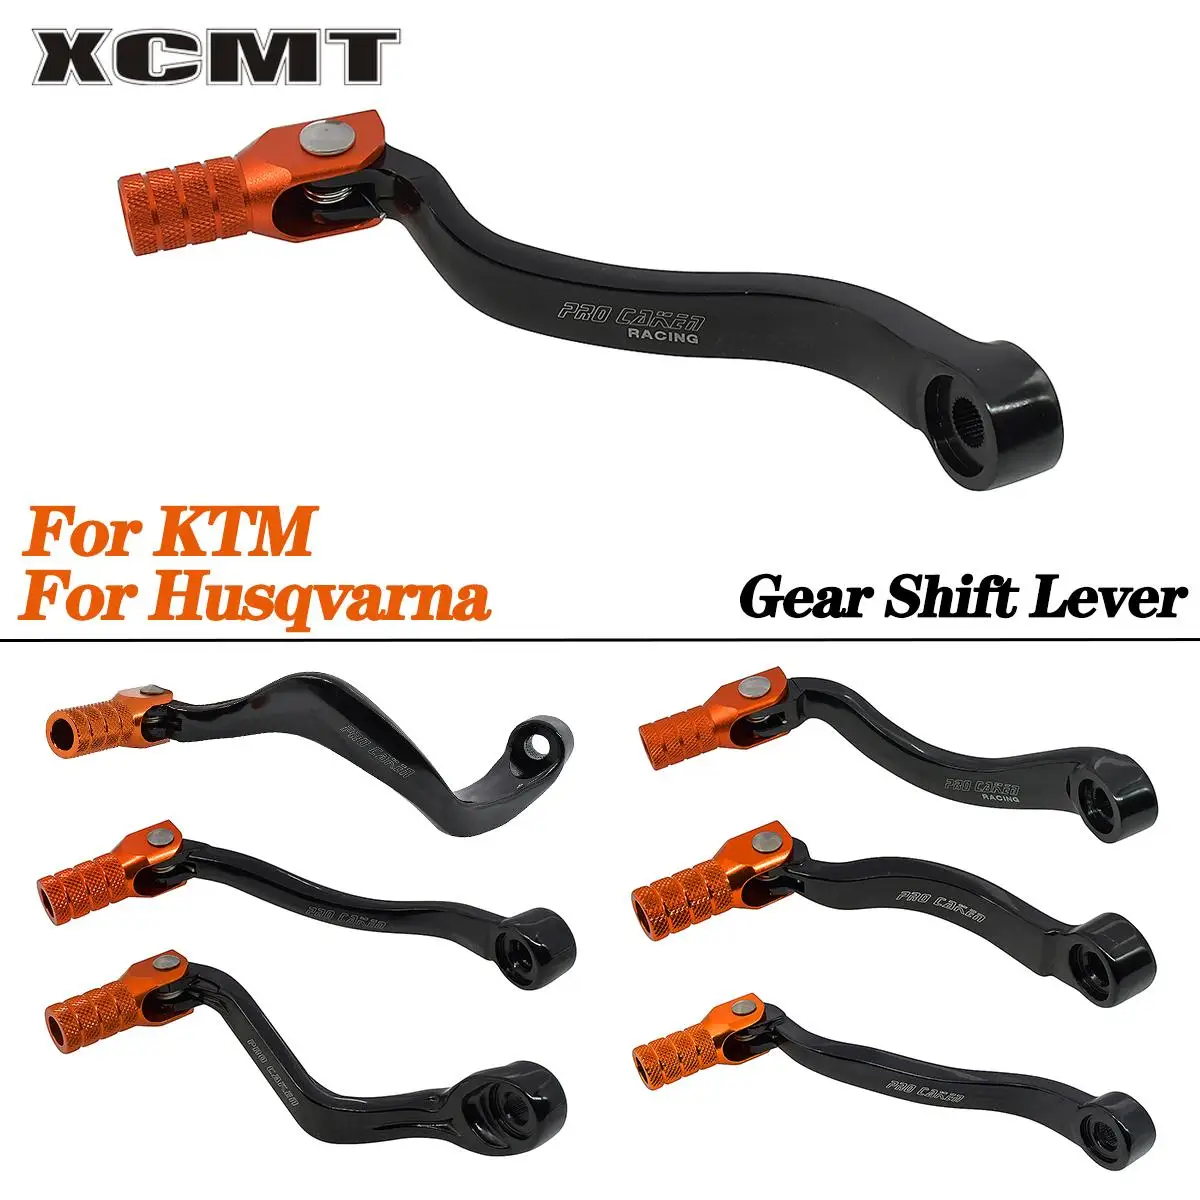 

Gear Shift Lever For KTM SX SX-F EXC EXC-F XC XC-F XCF-W XC-W TPI TC TE MC 85 105 125 250 350 450 500 701 SMC 690 Duke 950 990